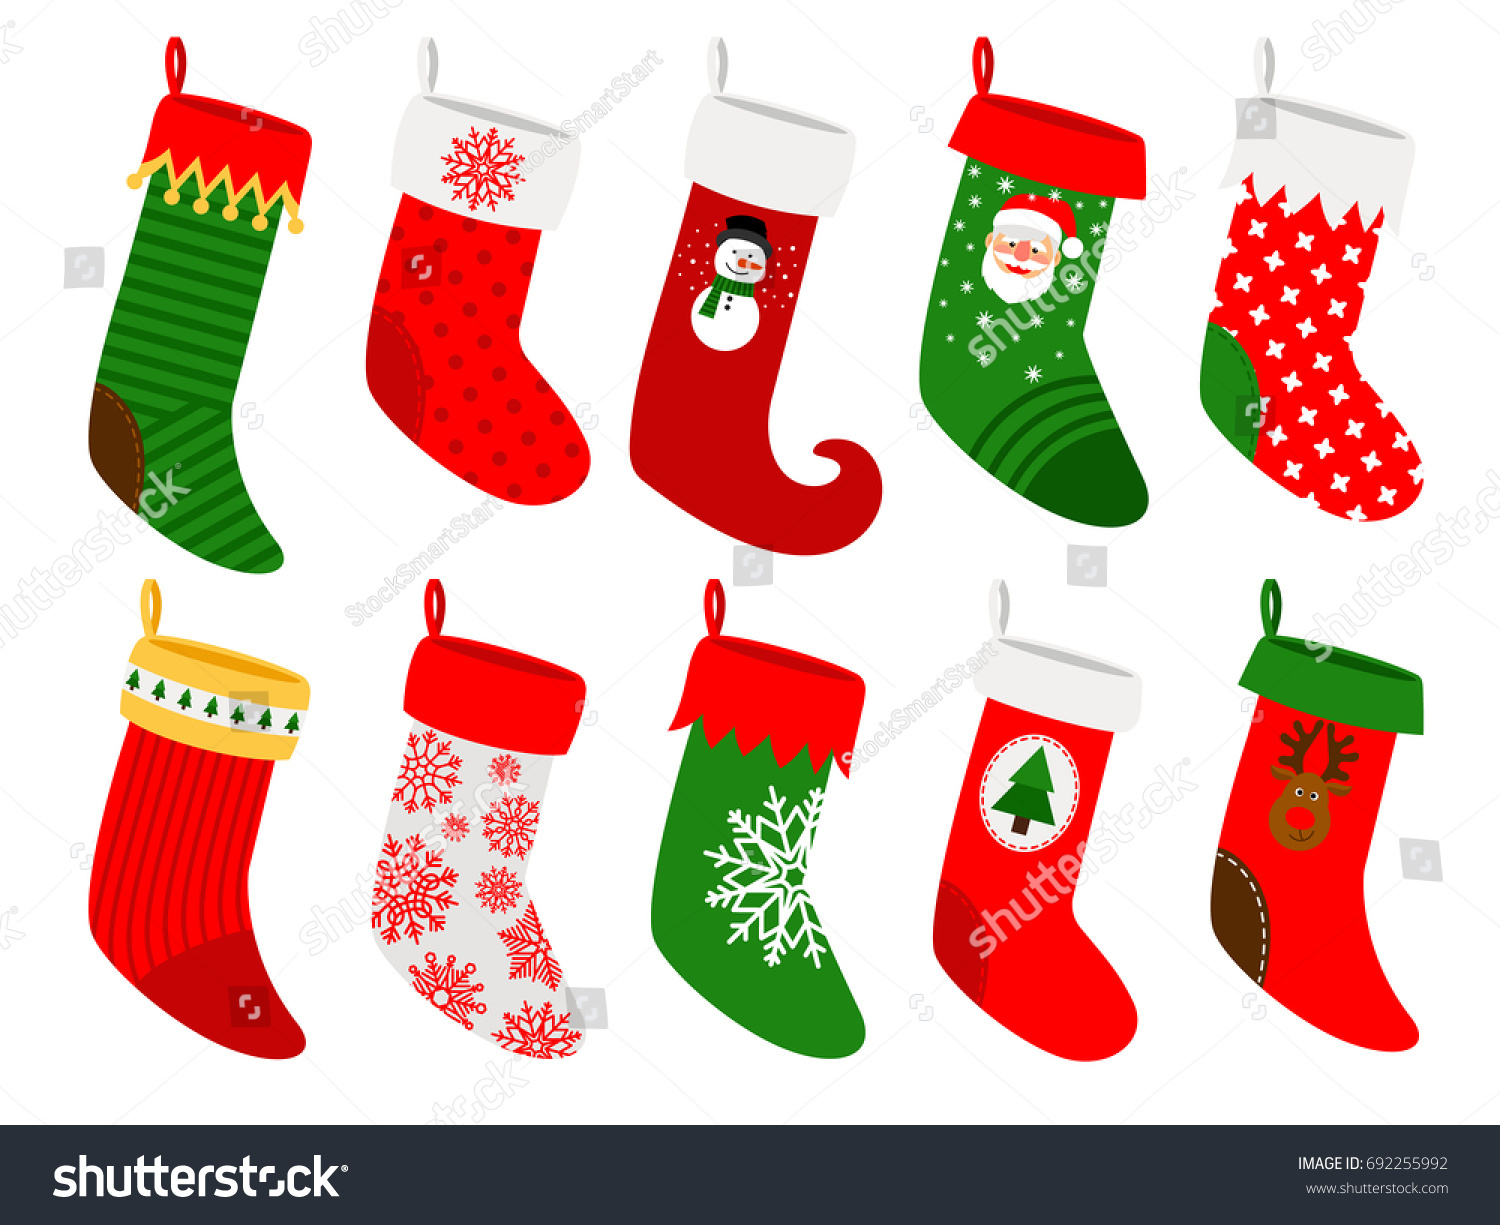 Christmas Socks Striped Hanging Stockings Snowflakes: стоковая иллюстрация,...